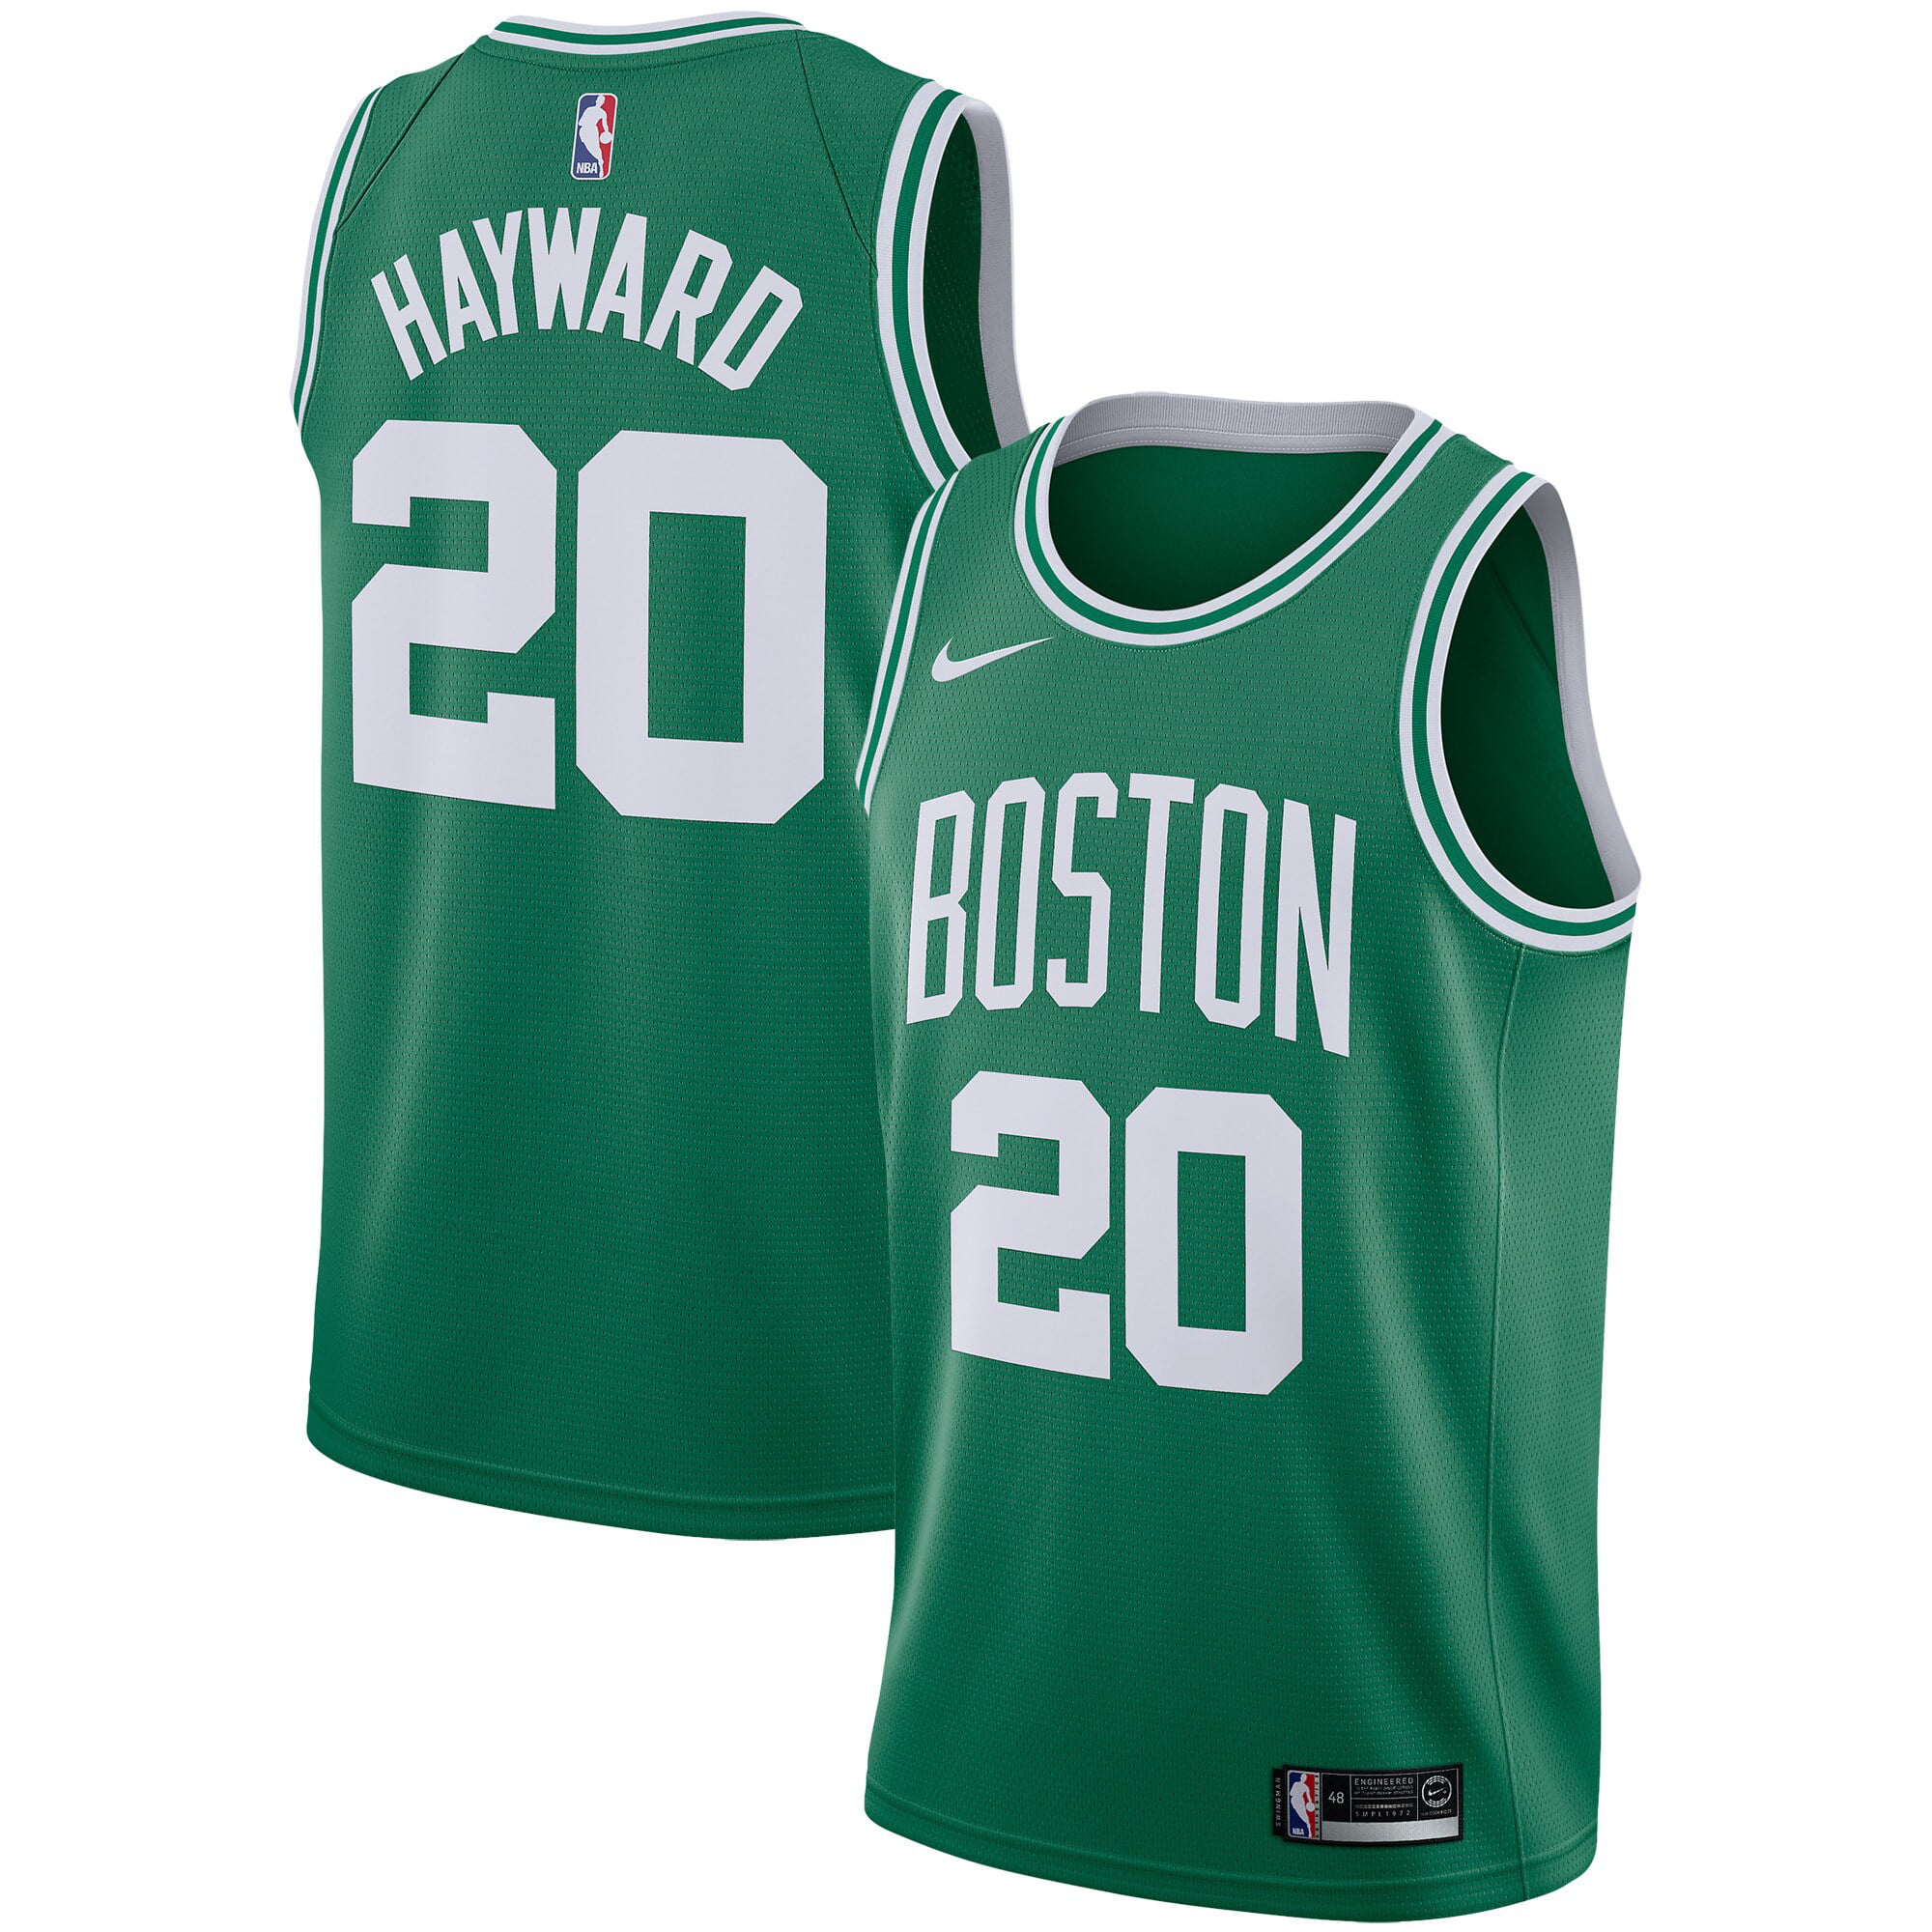 Gordon Hayward î€€Bostonî€ î€€Celticsî€ Nike Swingman î€€Jerseyî€ - Icon Edition - Green - Walmart.com ...